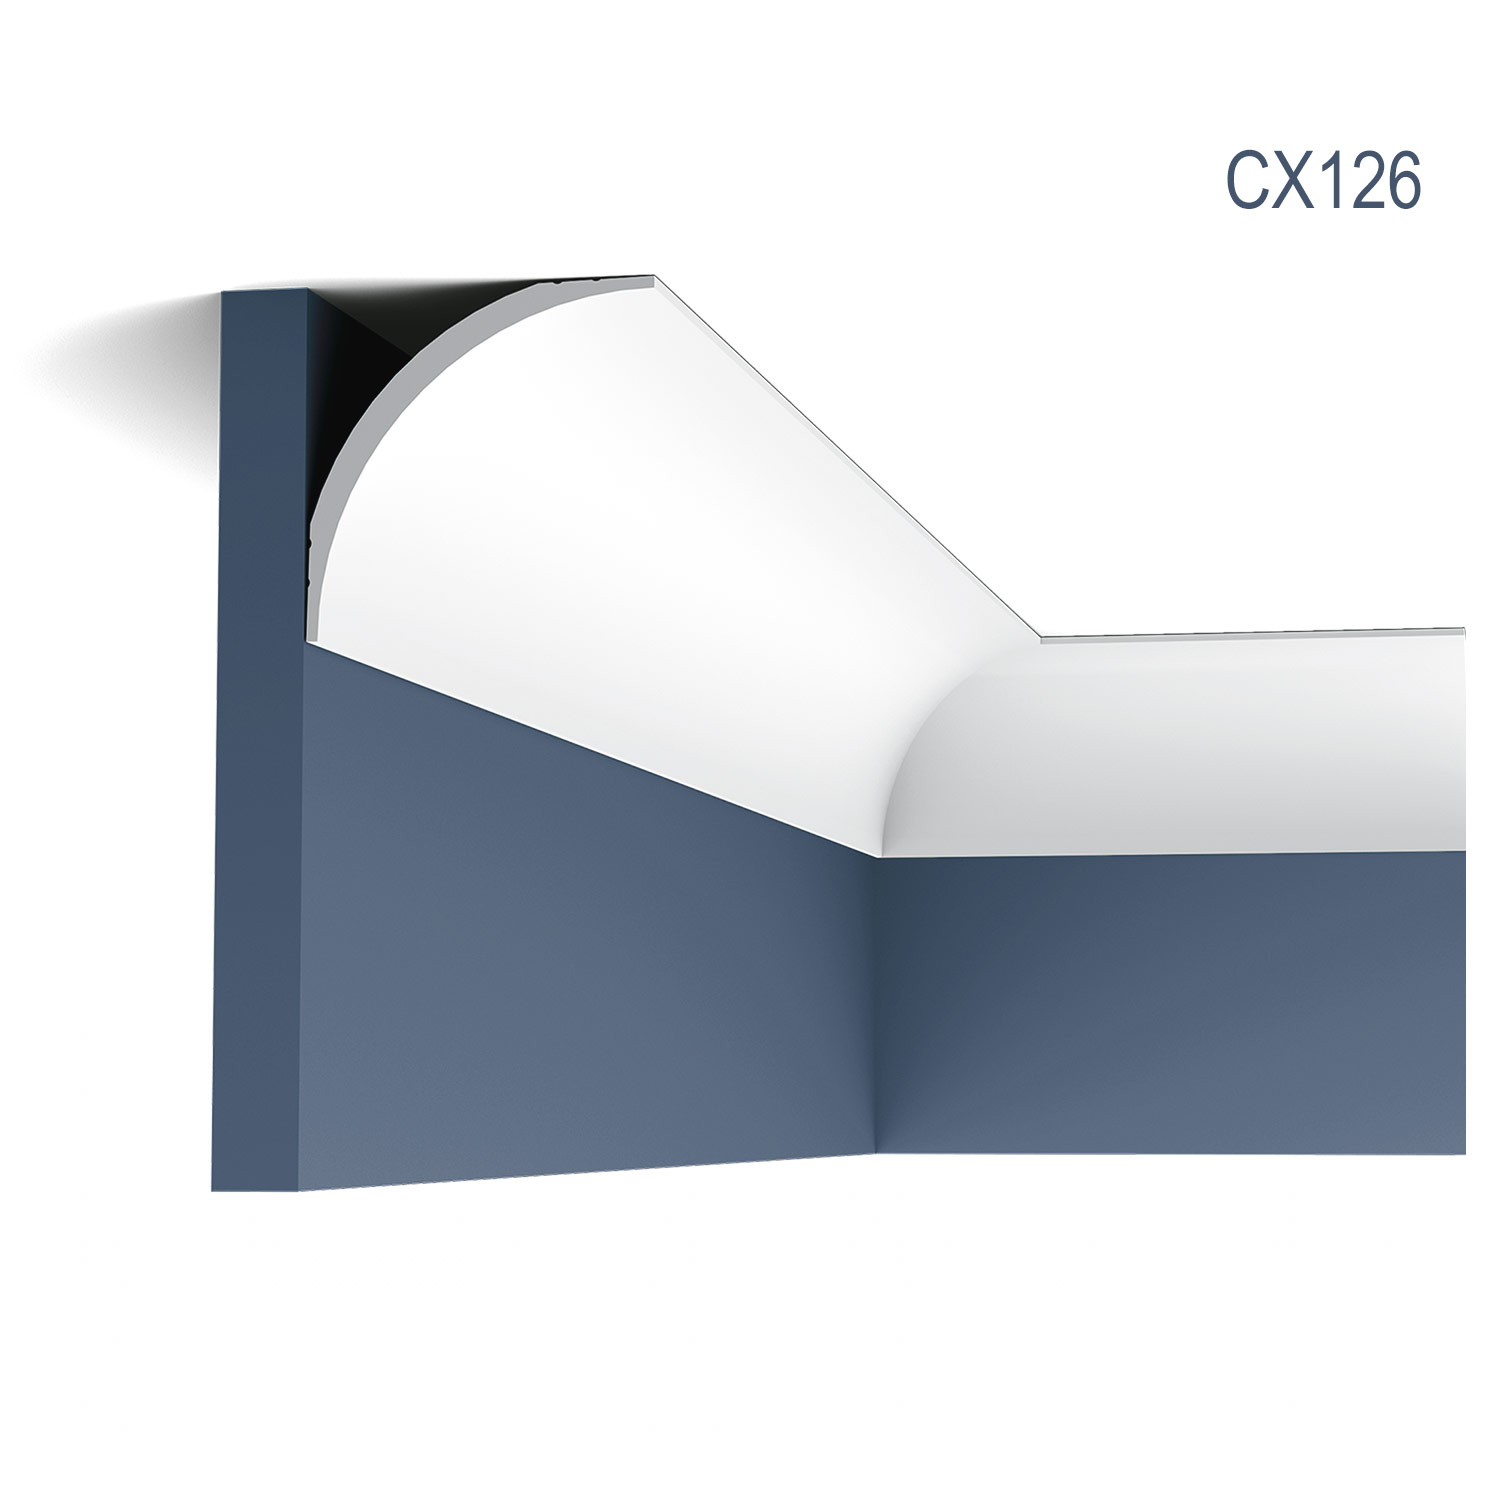 Cornisa Axxent CX126, Dimensiuni: 200 X 8.7 X 8.7 cm, Orac Decor